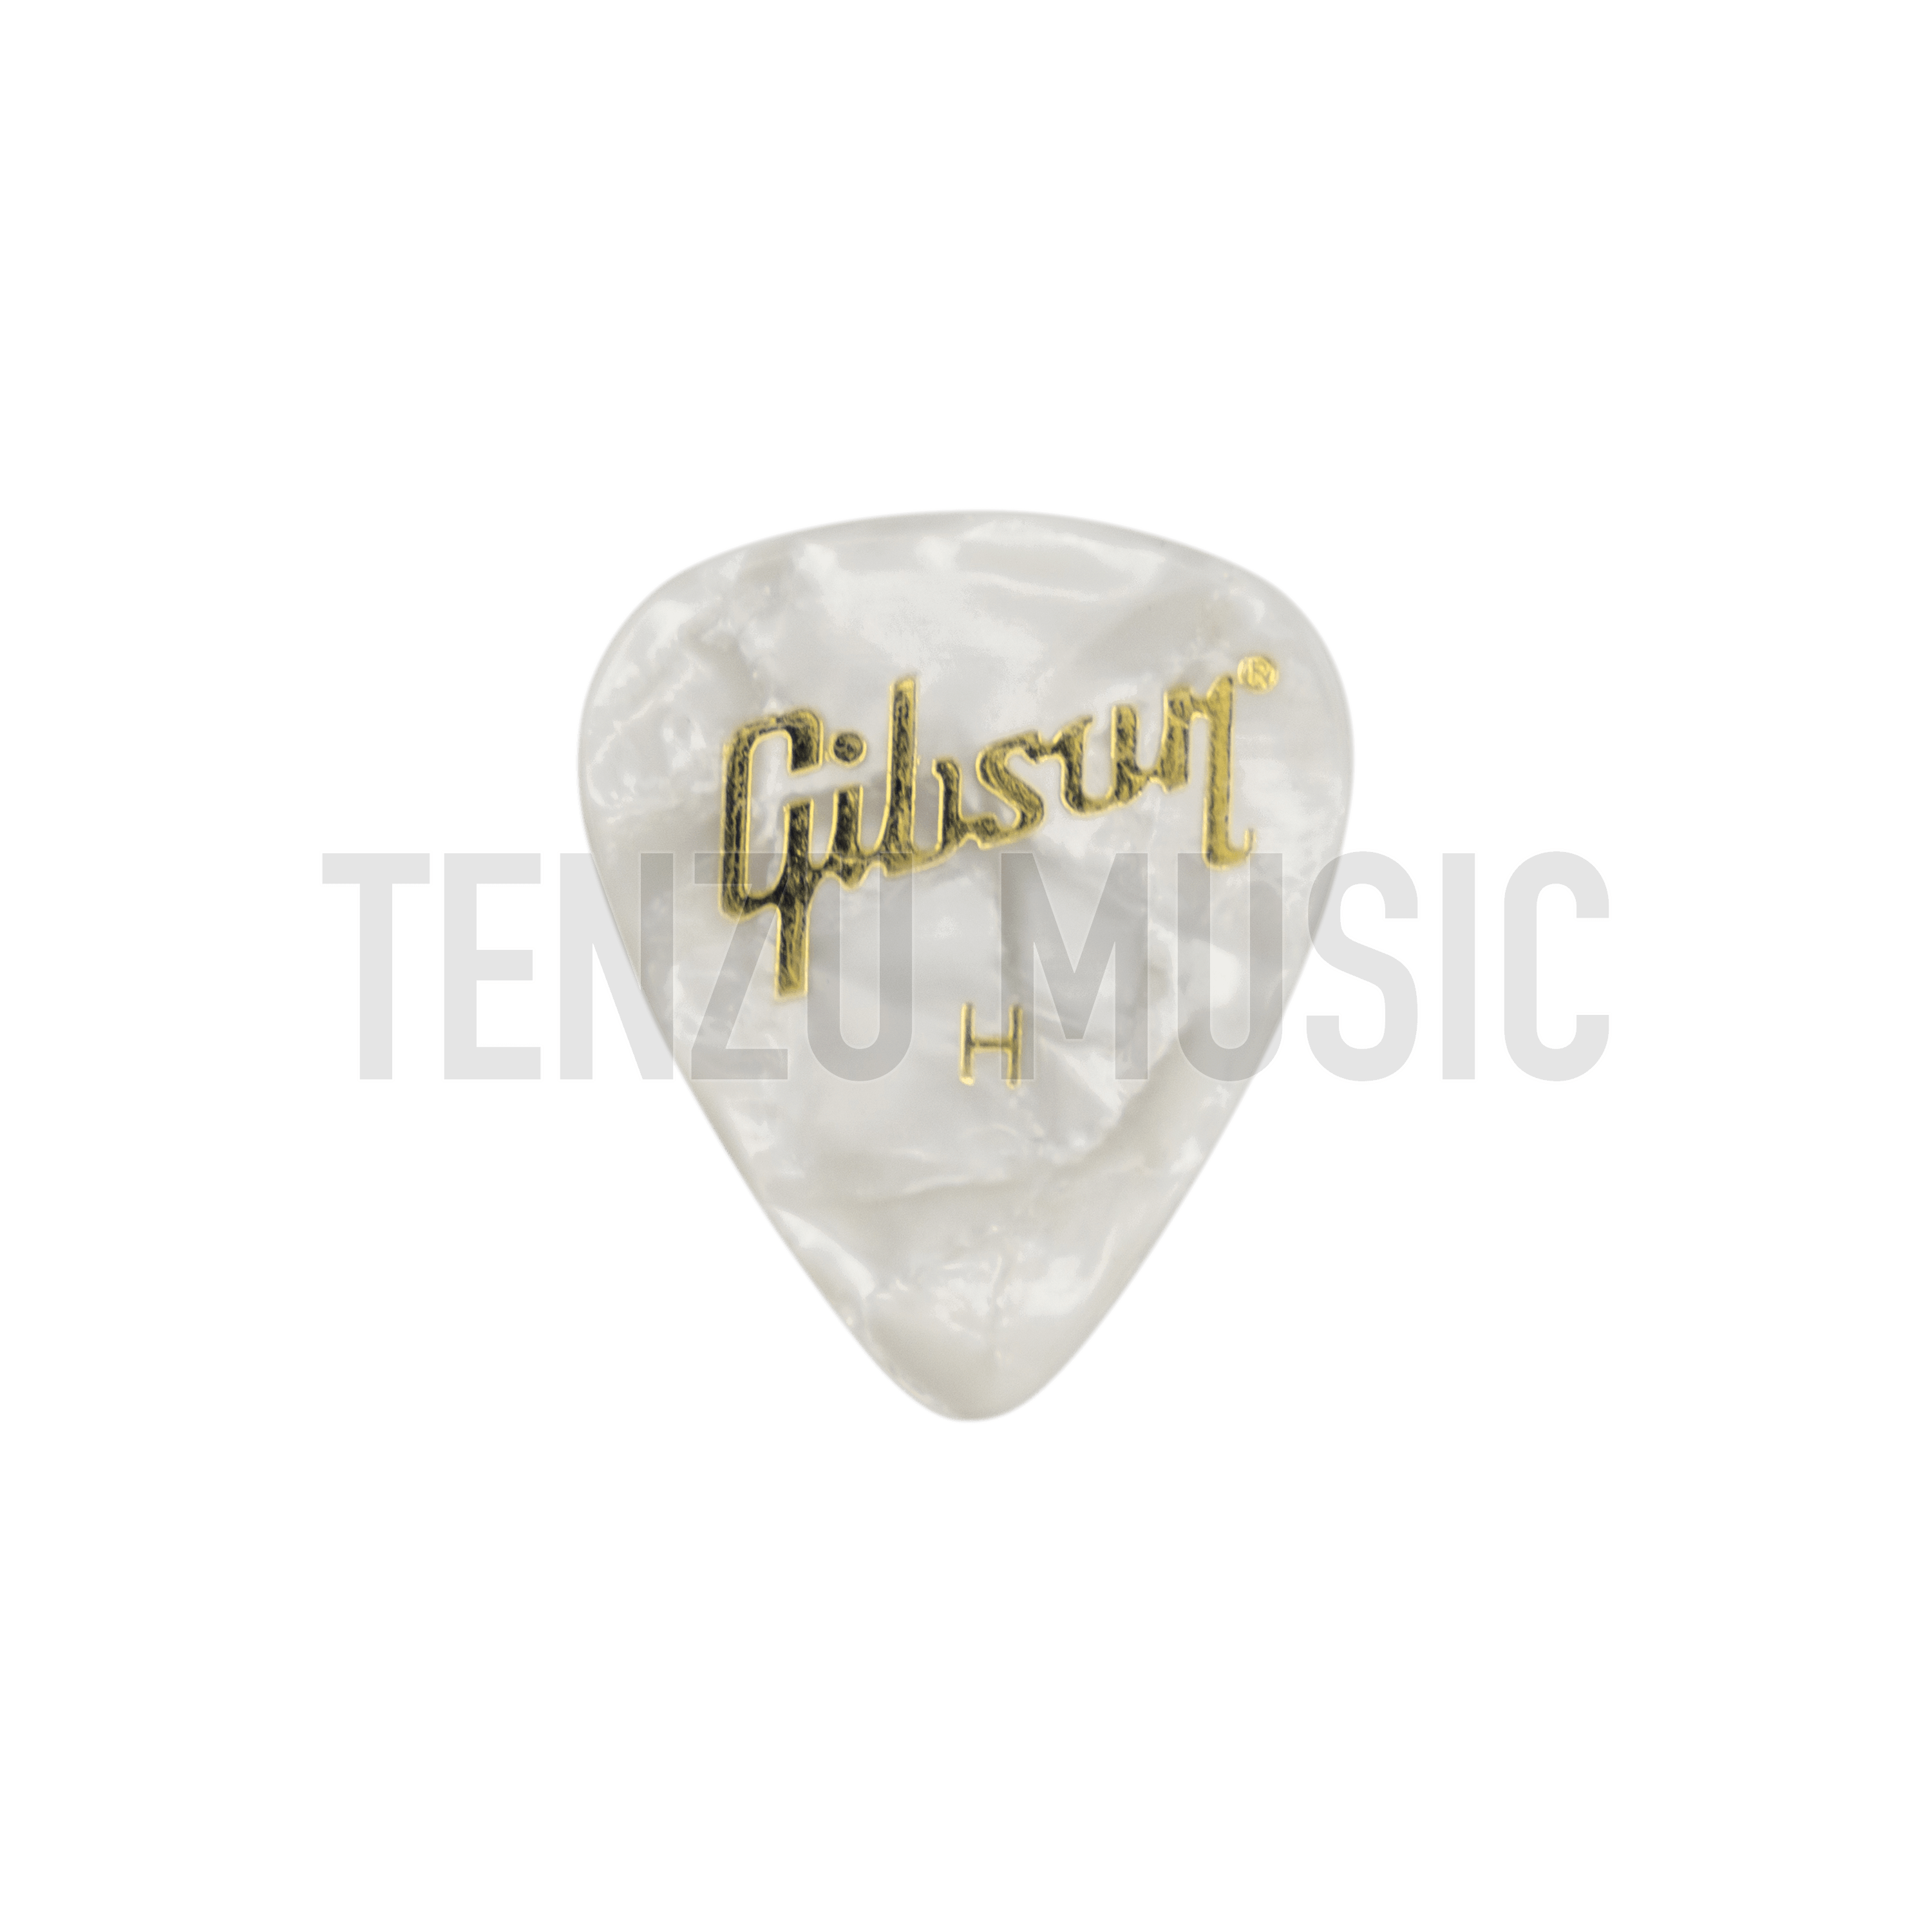 Gibson White Pearl Heavy